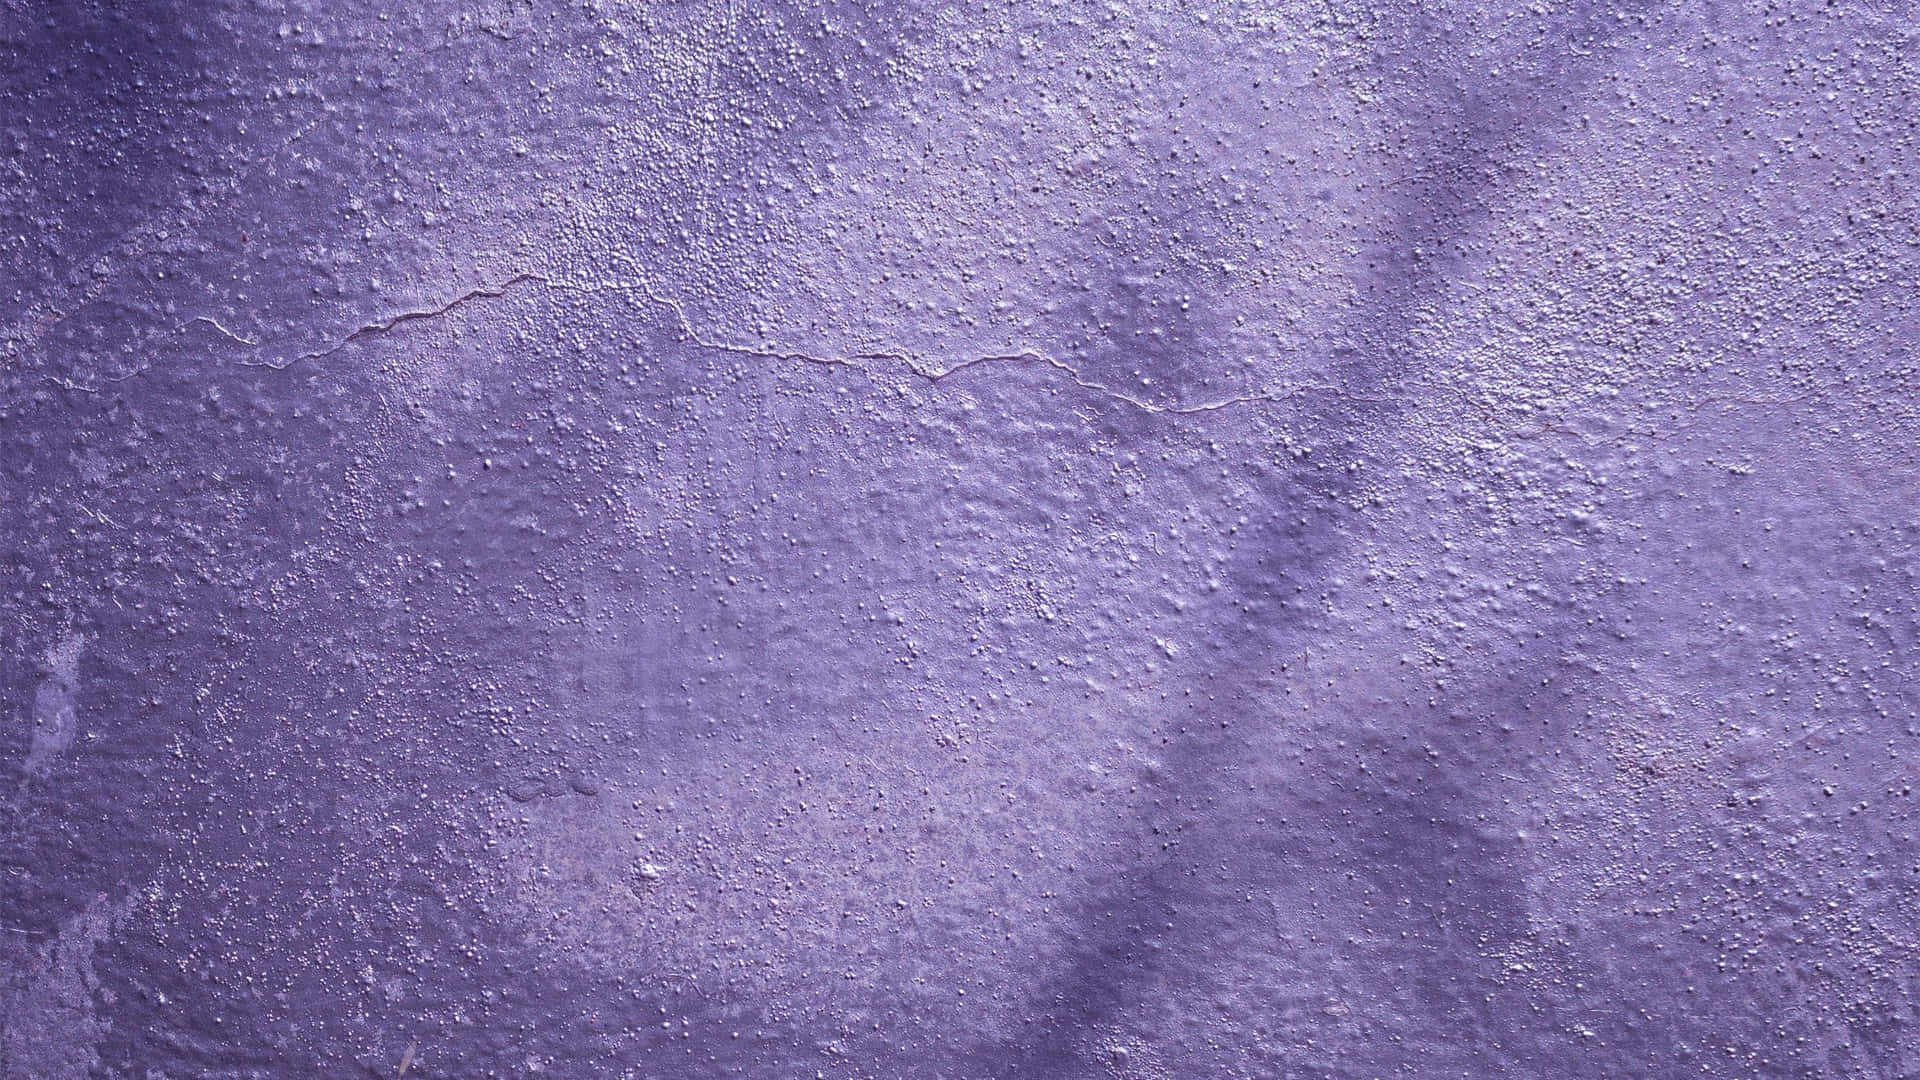 A Purple Wall With A Tree